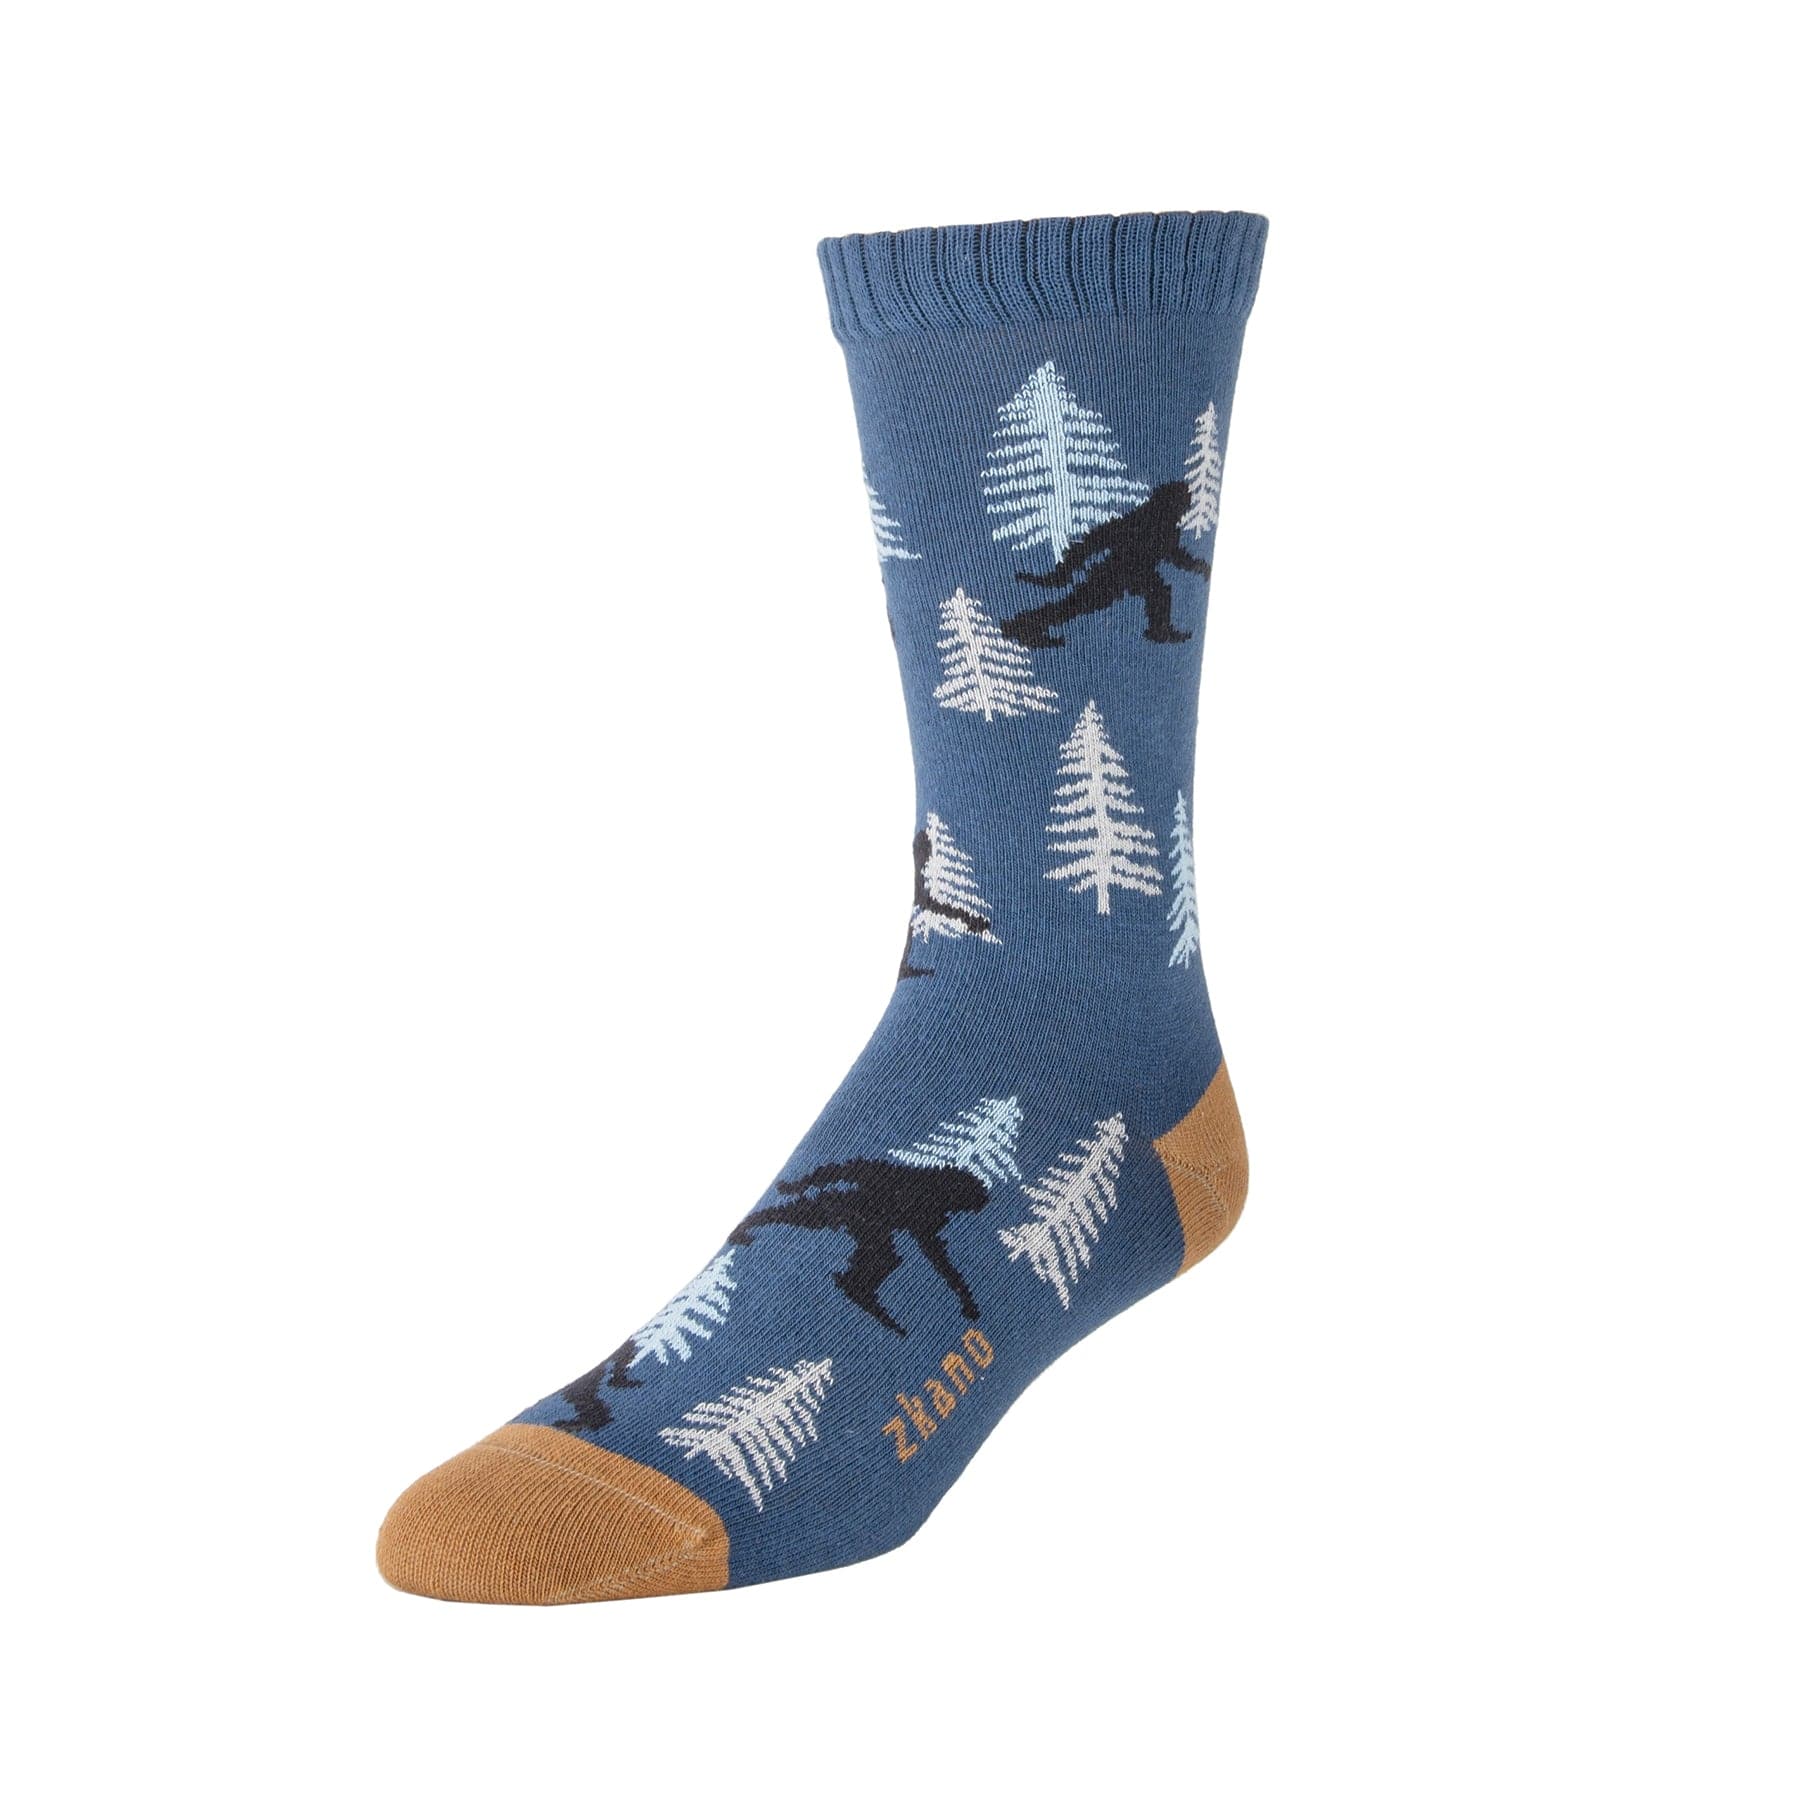 Into the Wilderness - Organic Cotton Crew Socks - Navy – zkano socks